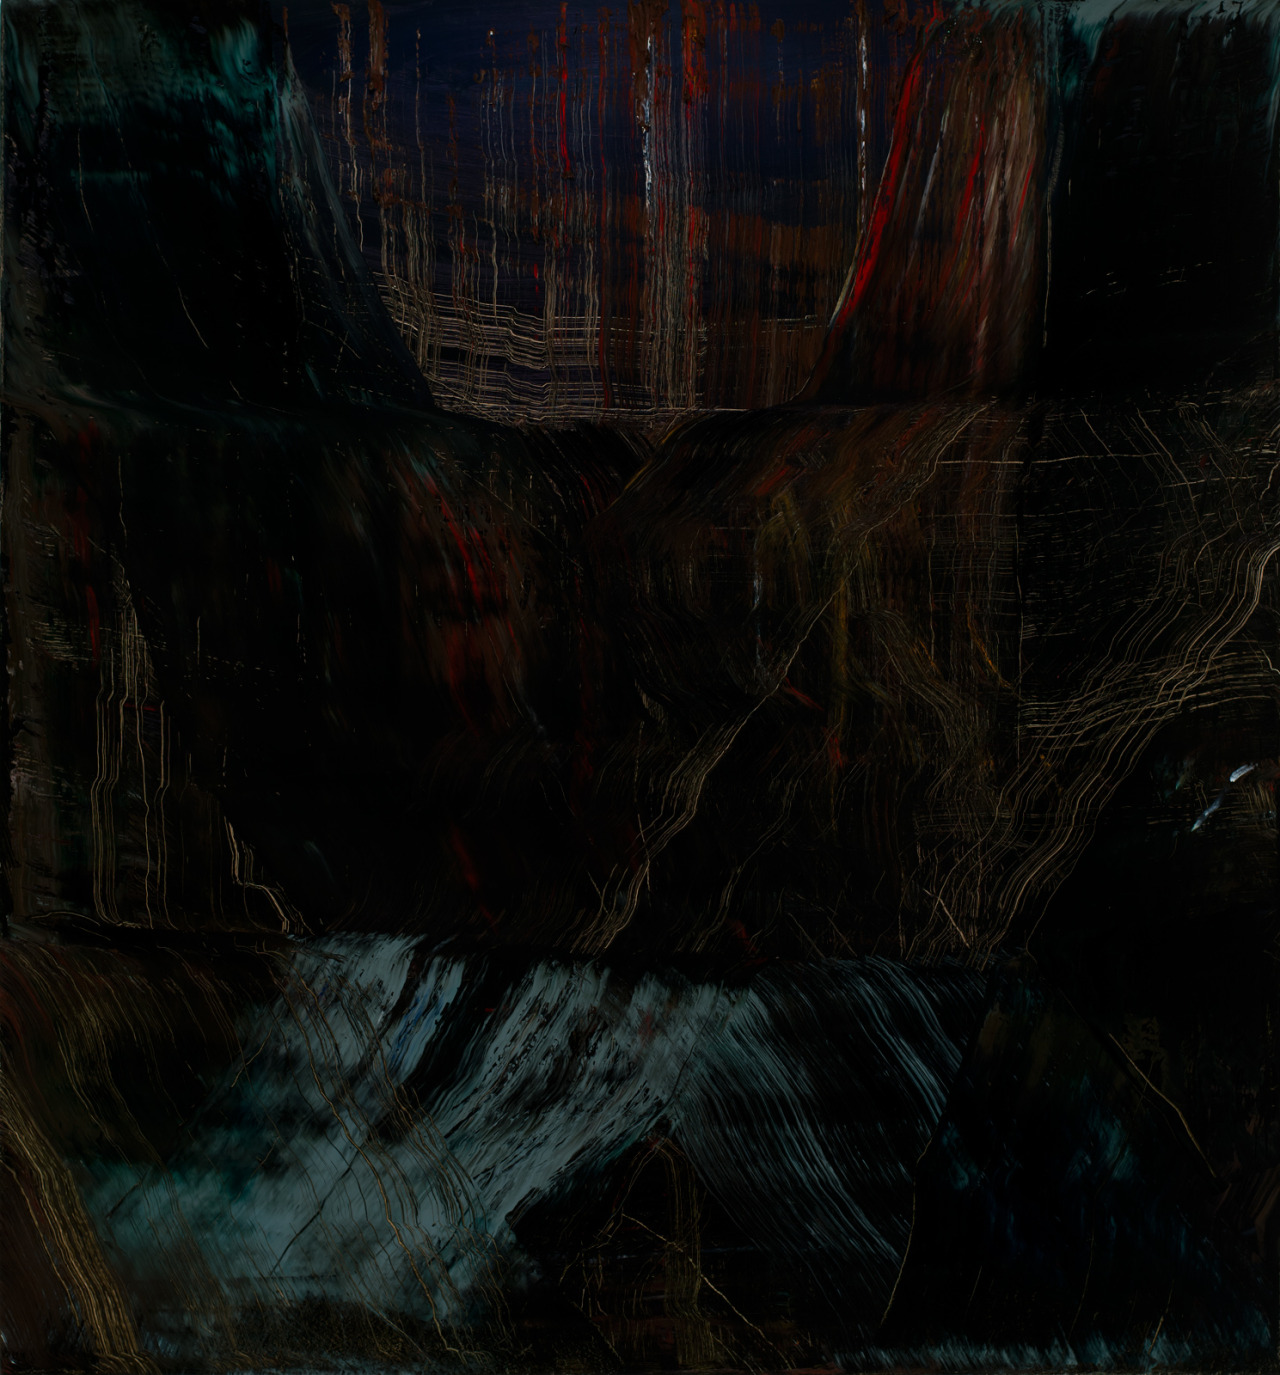 Jeremy Szopinski
X #12
Oil on canvas
70” x 65”
2014
http://jeremyszopinski.tumblr.com